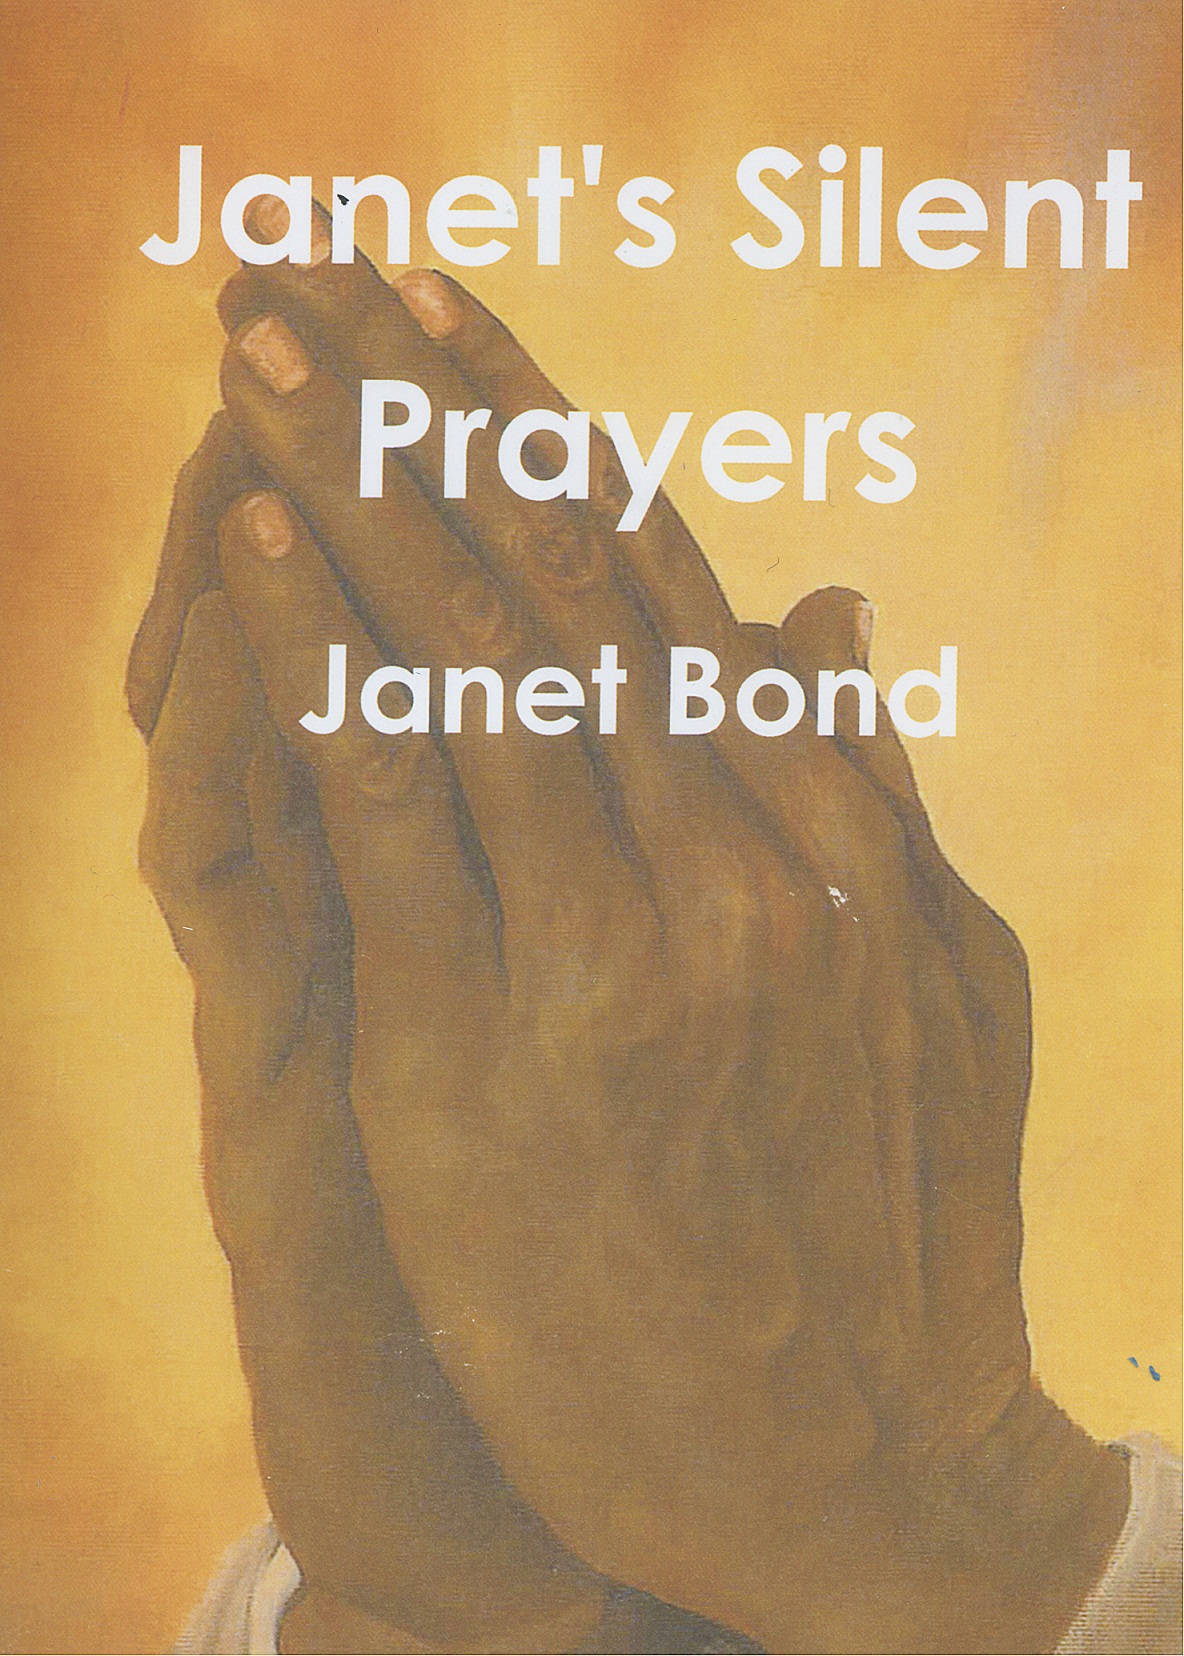 Janet's silent prayers